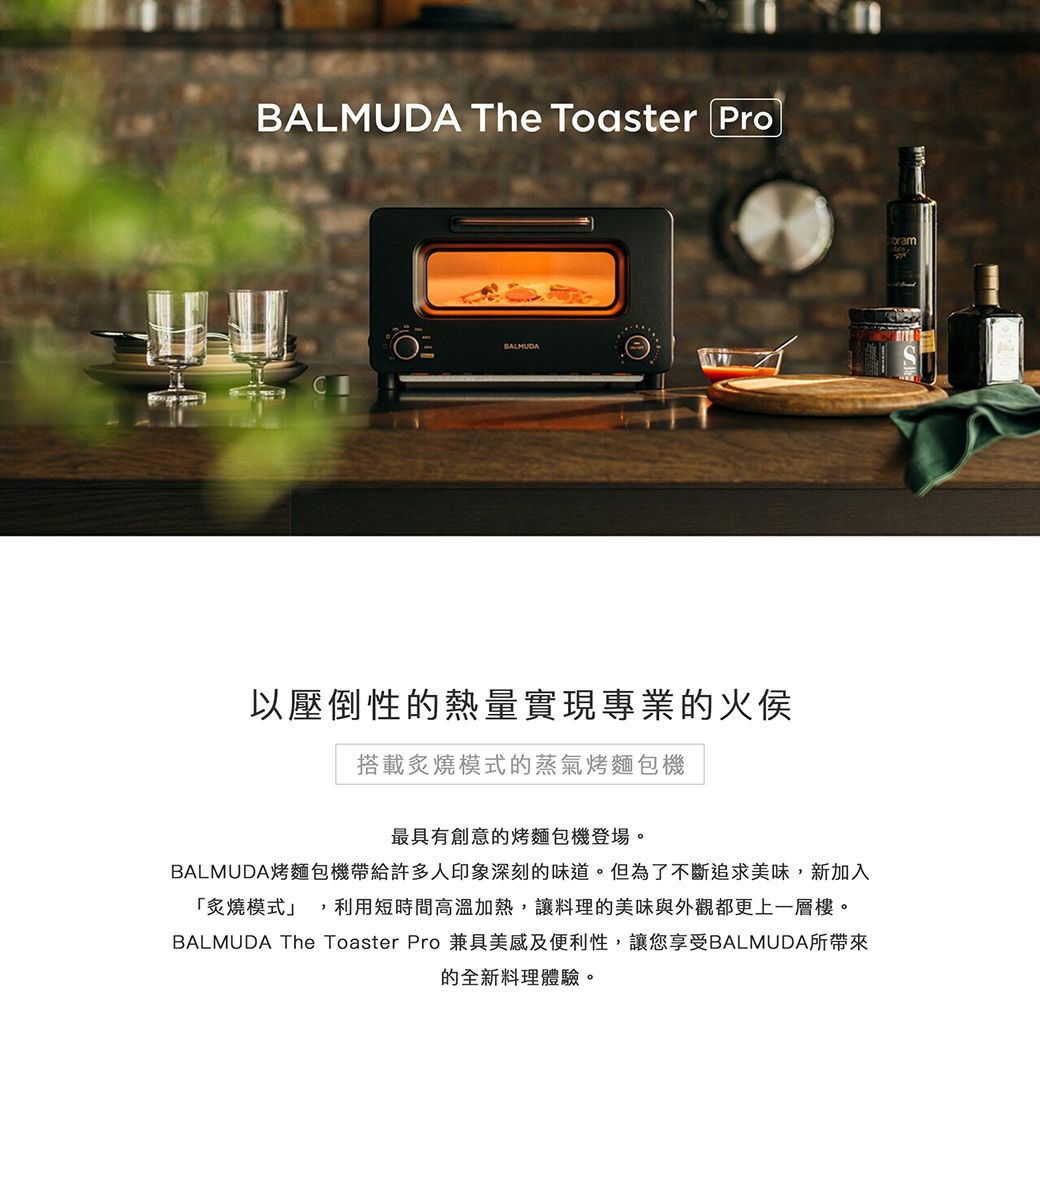 BALMUDA The Toaster K05A Pro 蒸氣烤麵包機旗艦版(日本限定) 一年保固